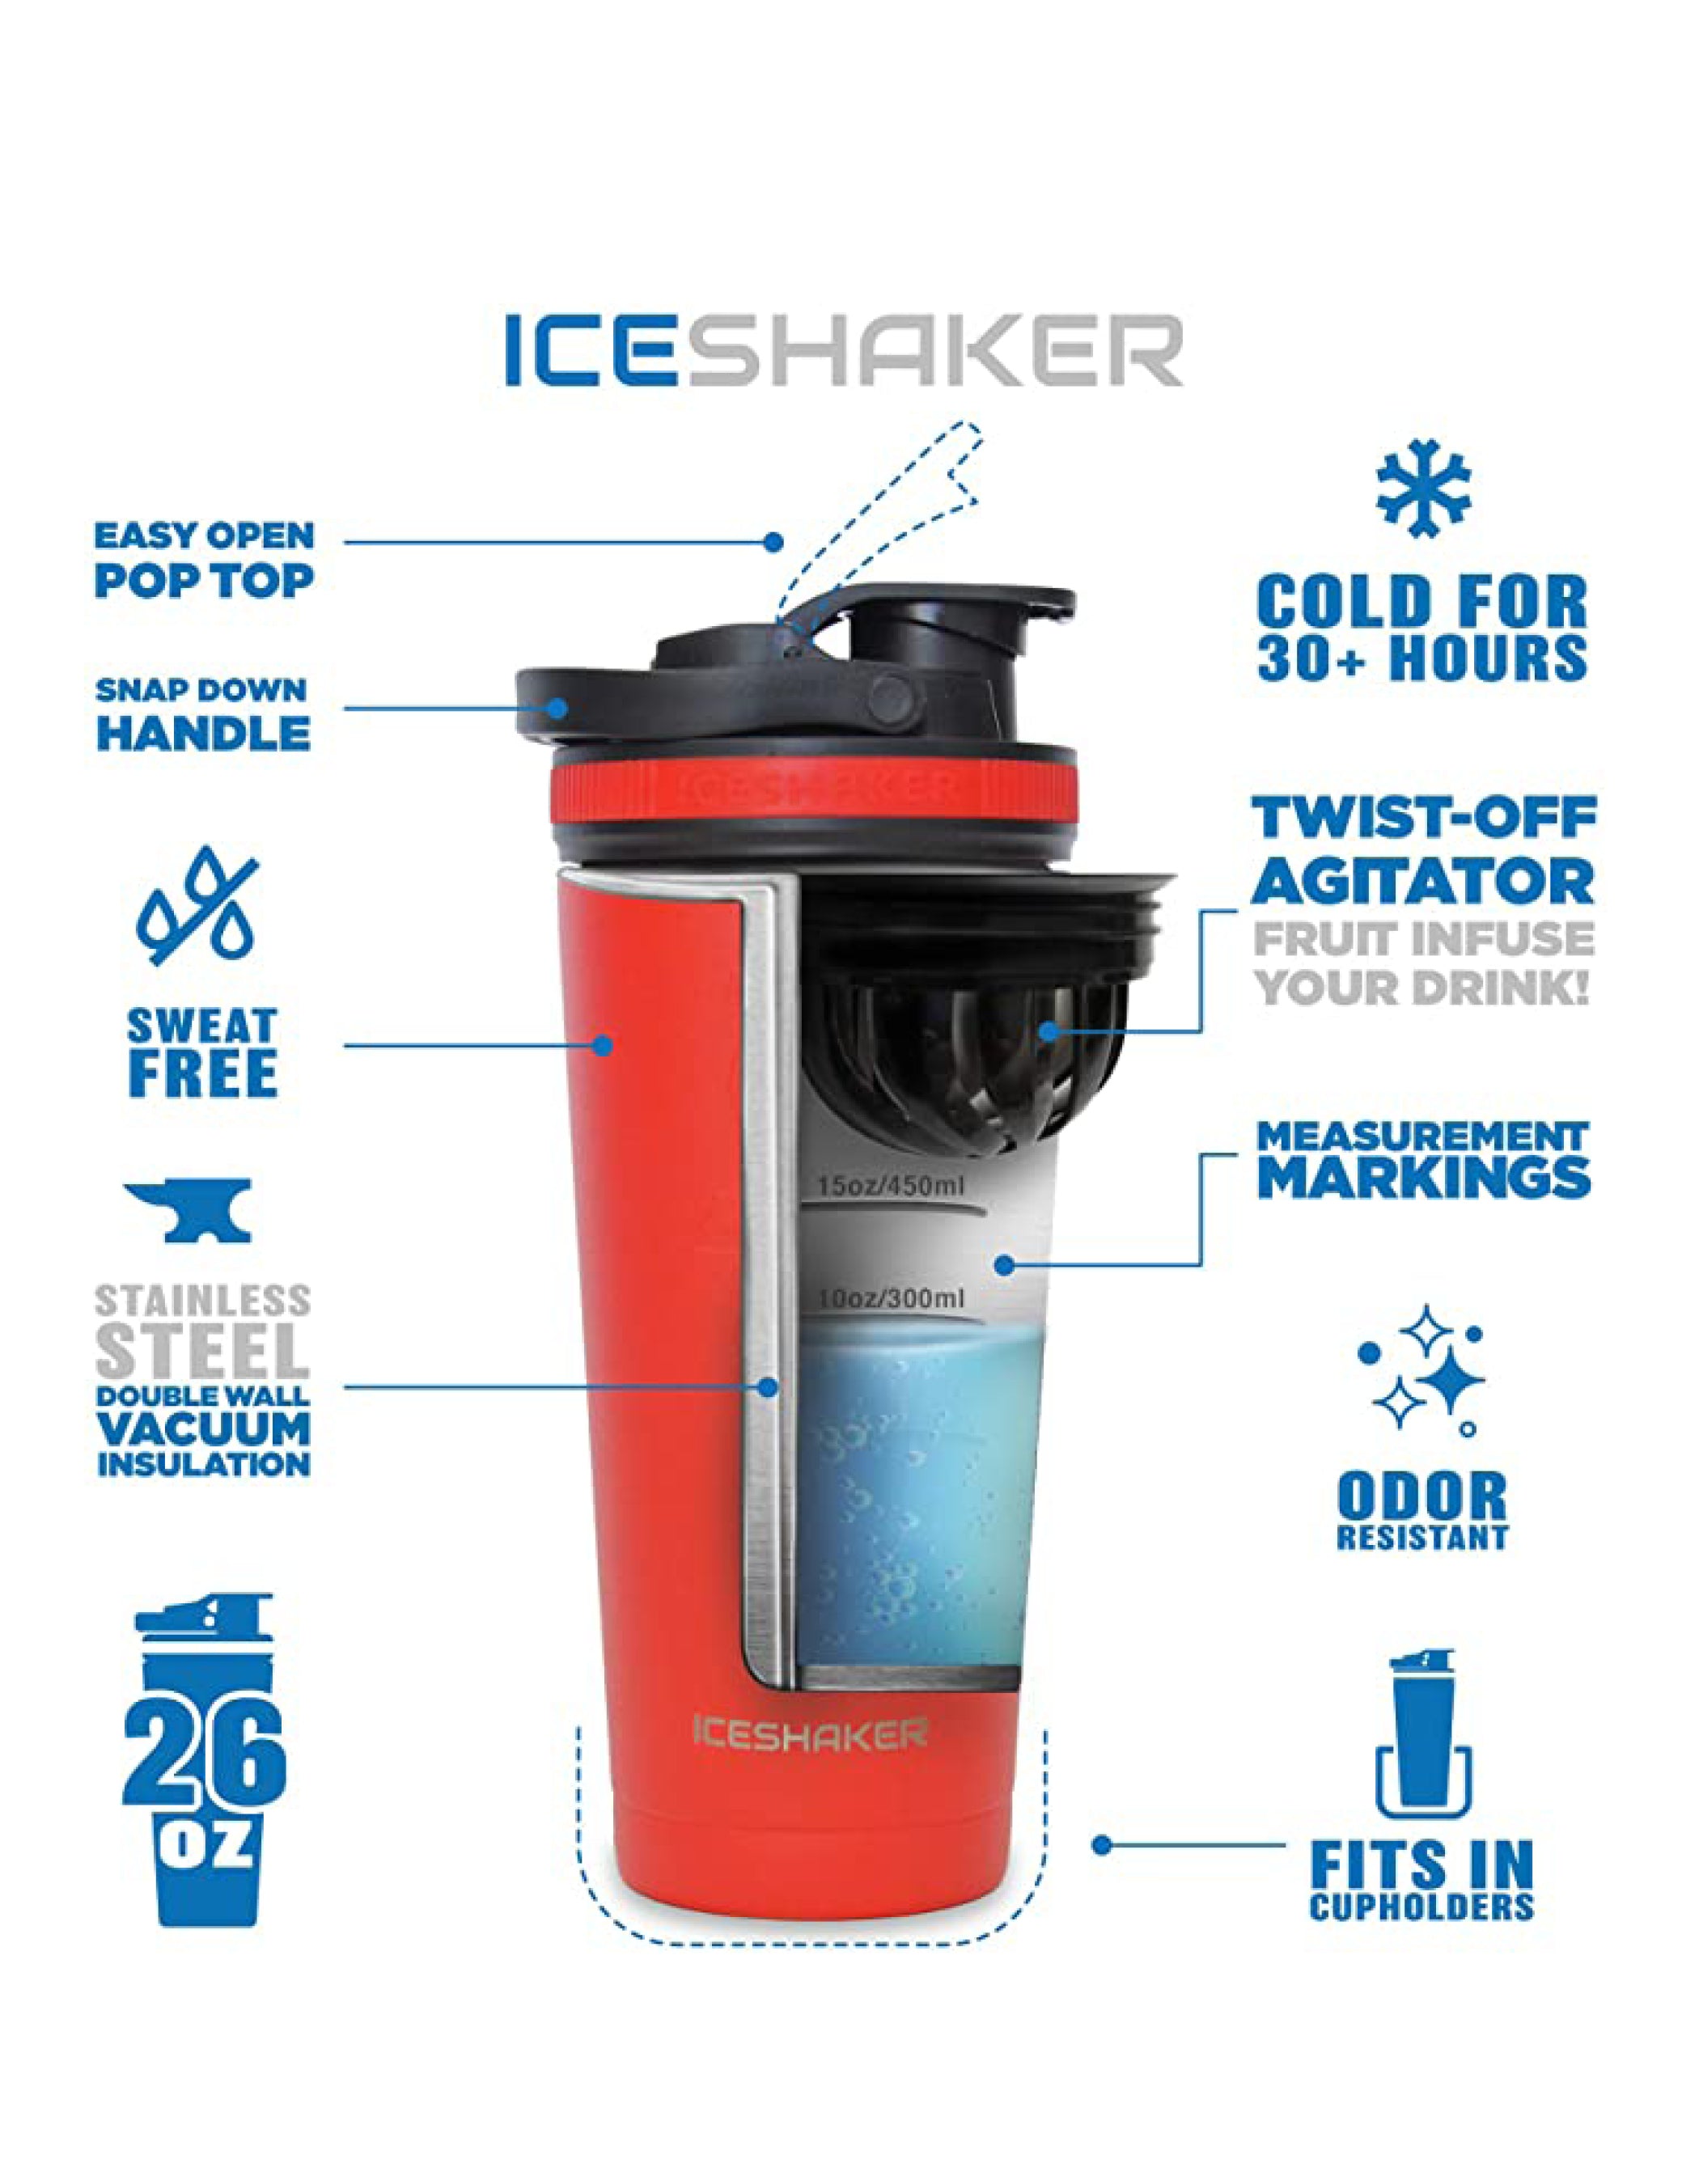 Onnit x Ice Shaker